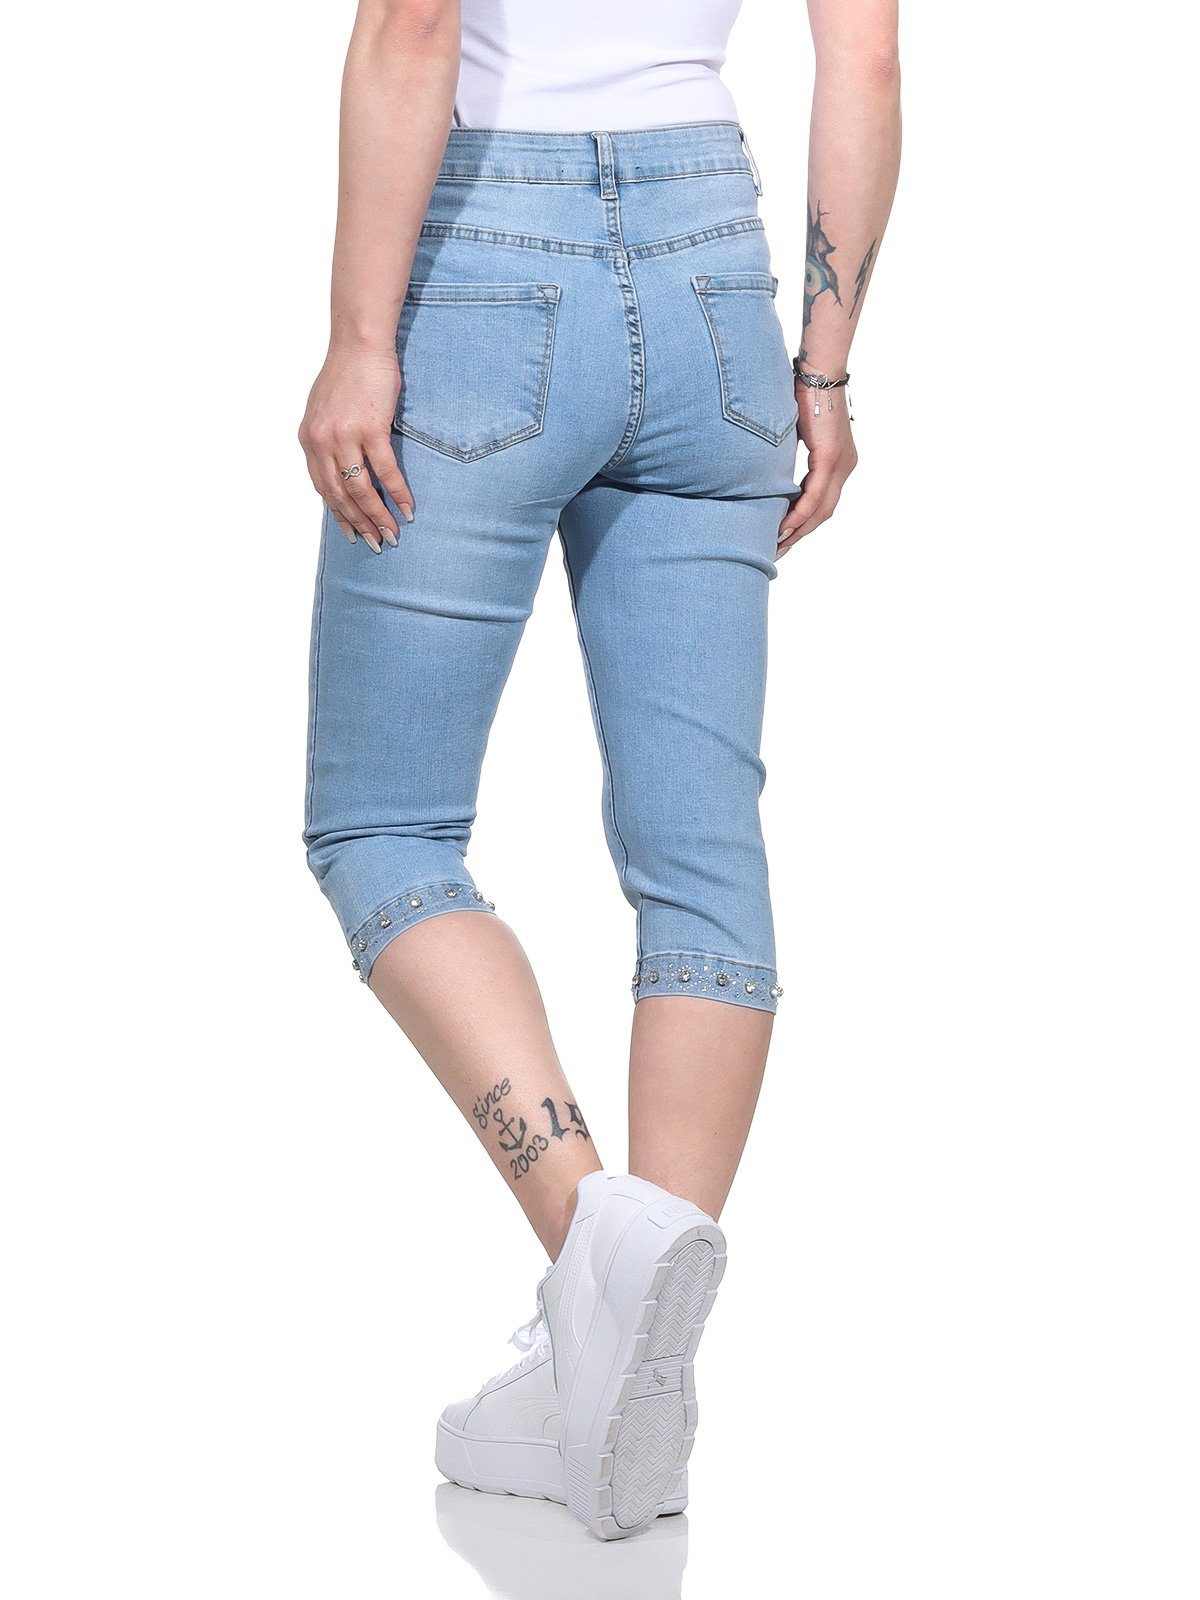 Aurela Damenmode Jeansbermudas 5-Pocket-Style kurze mit Damen Caprihosen Stretchanteil, Jeans Sommer Bermuda Jeanshosen